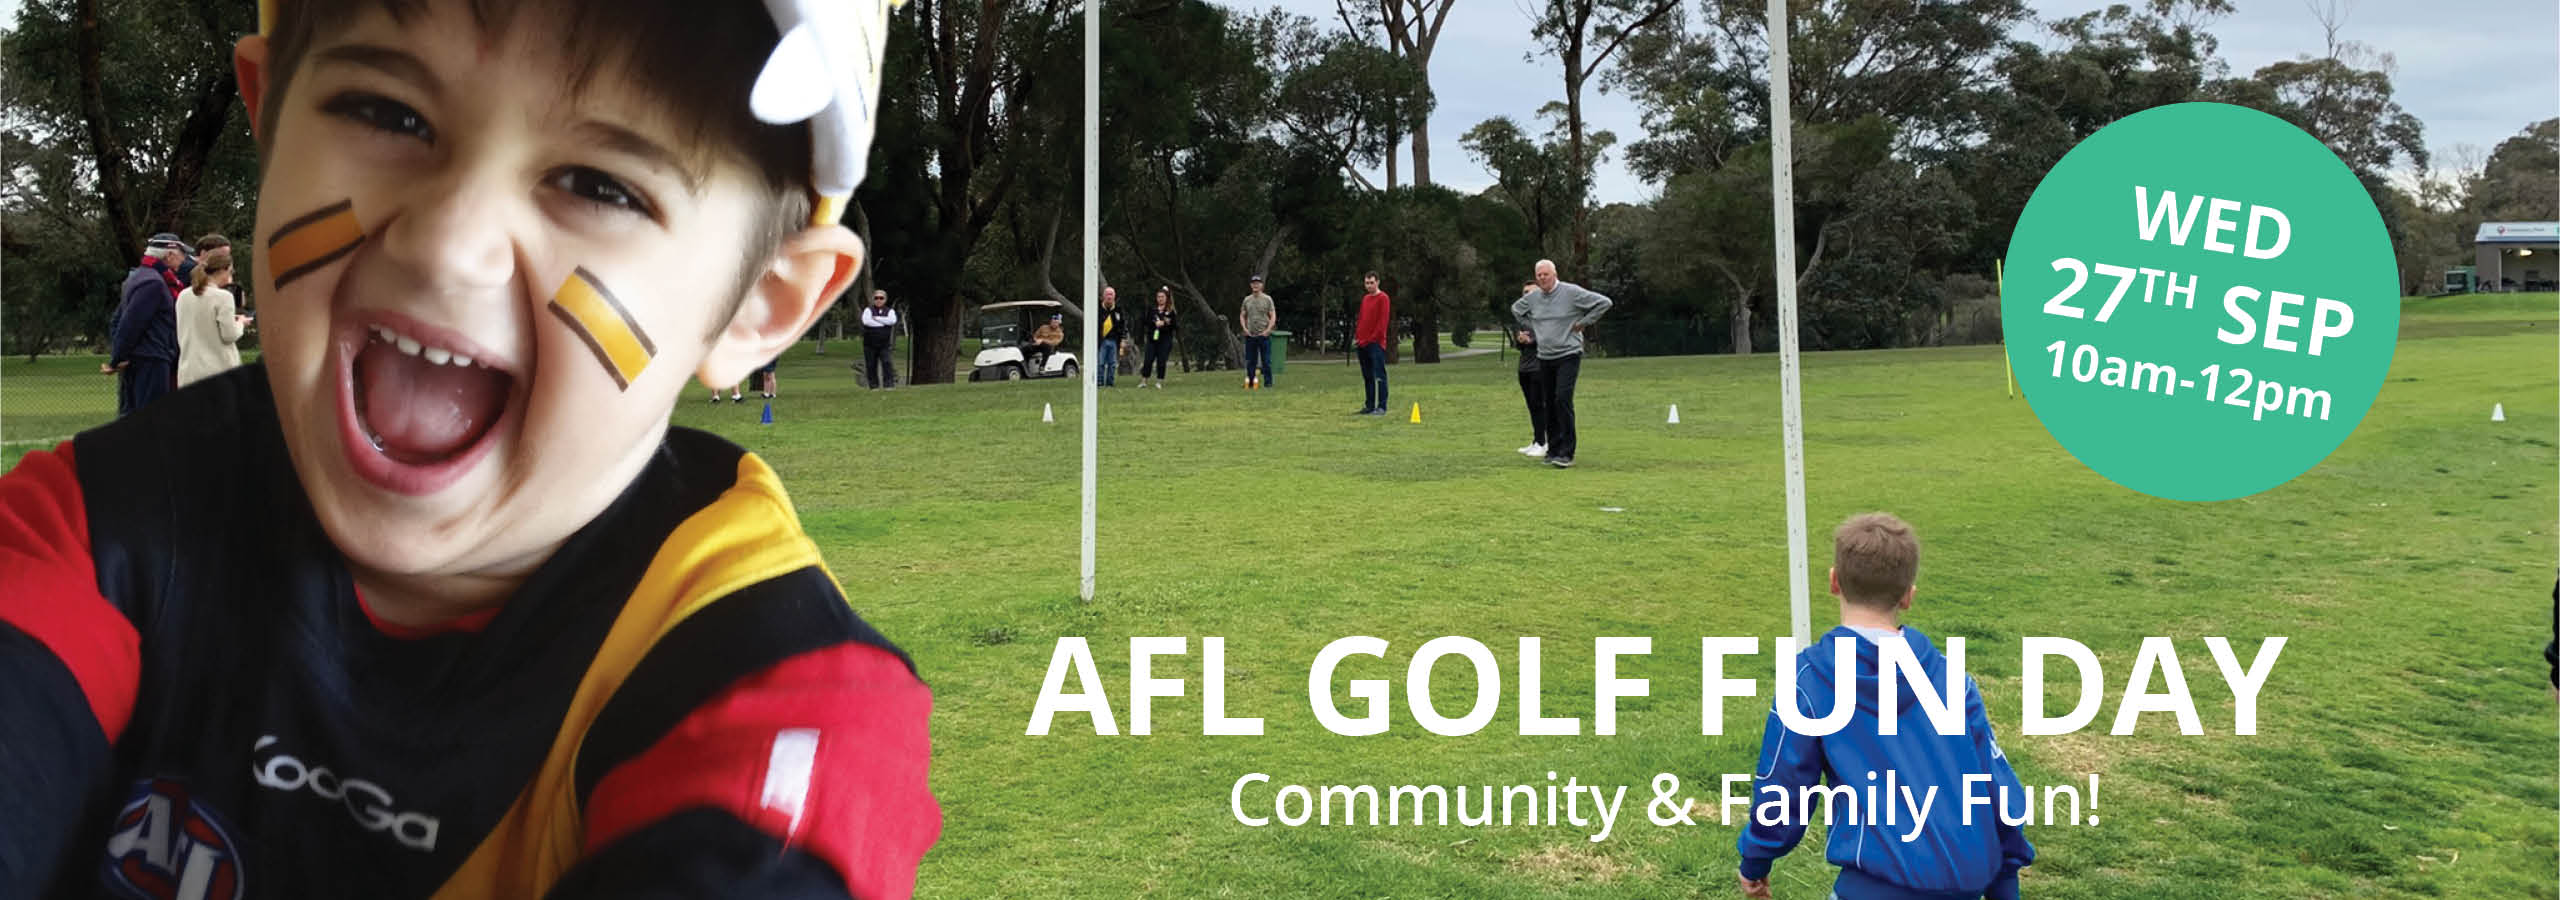 Centenary Park Golf AFL Fun Day event